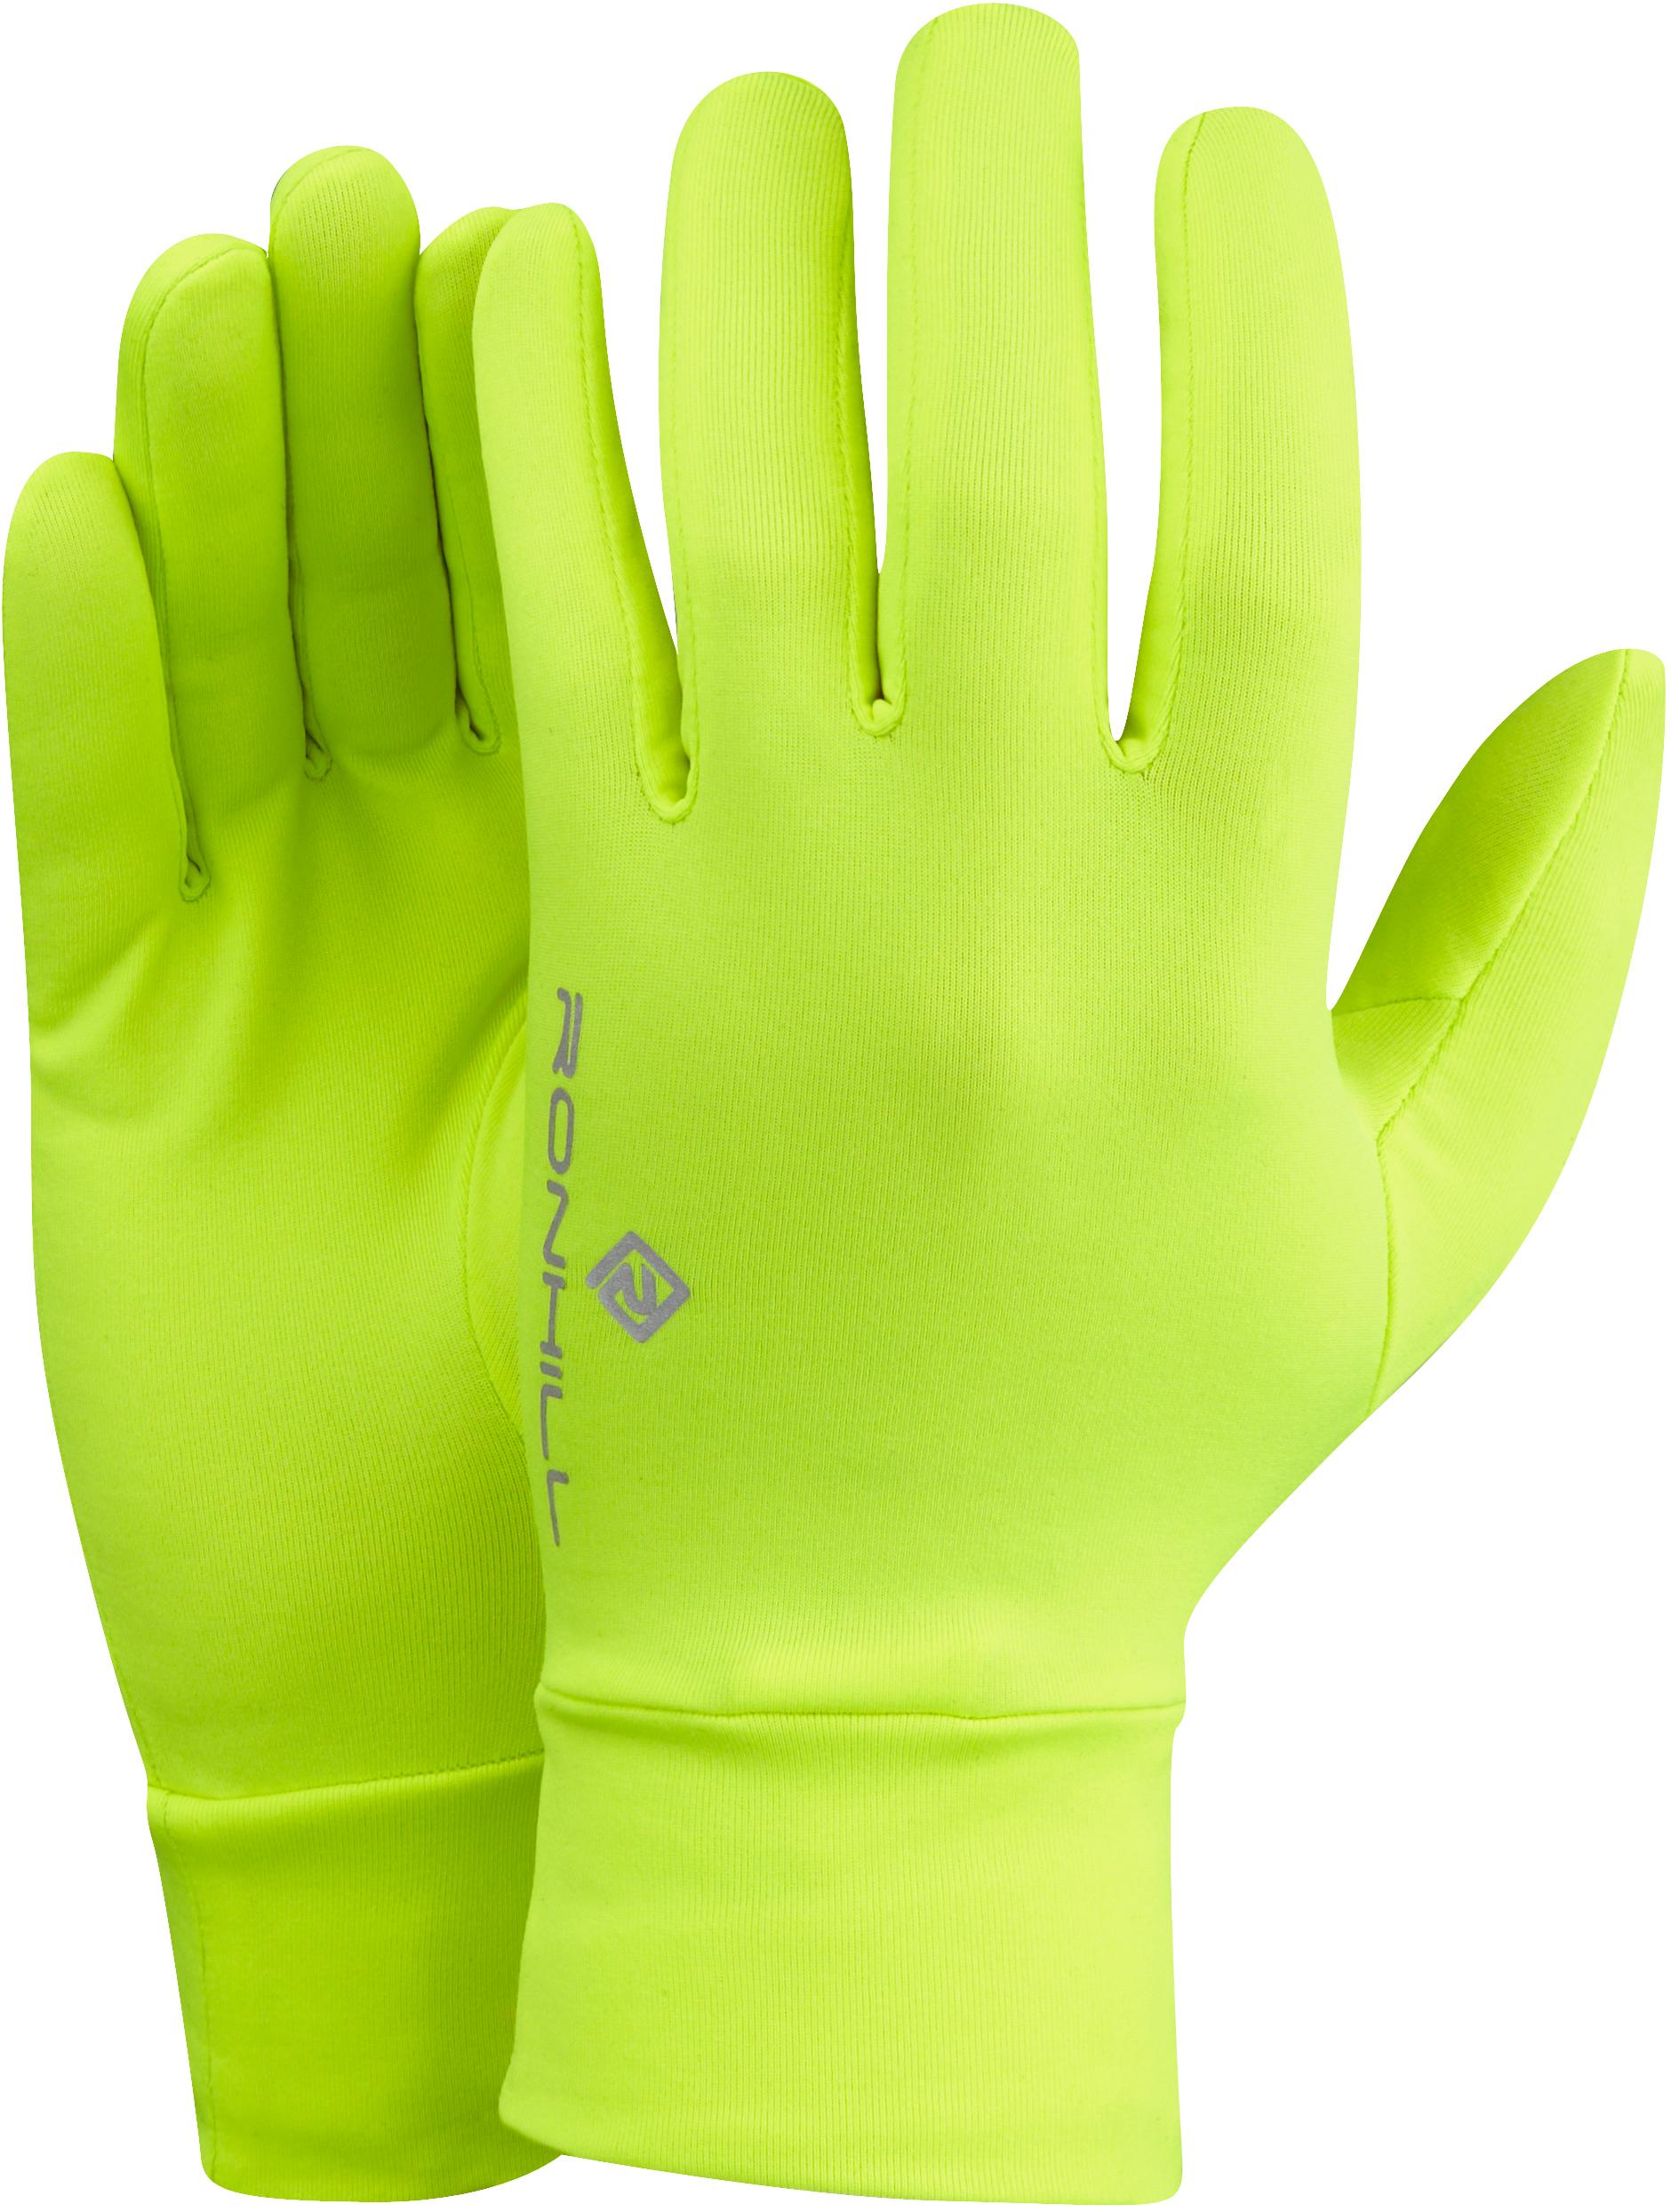 Ronhill Classic Glove - Fluro Yellow